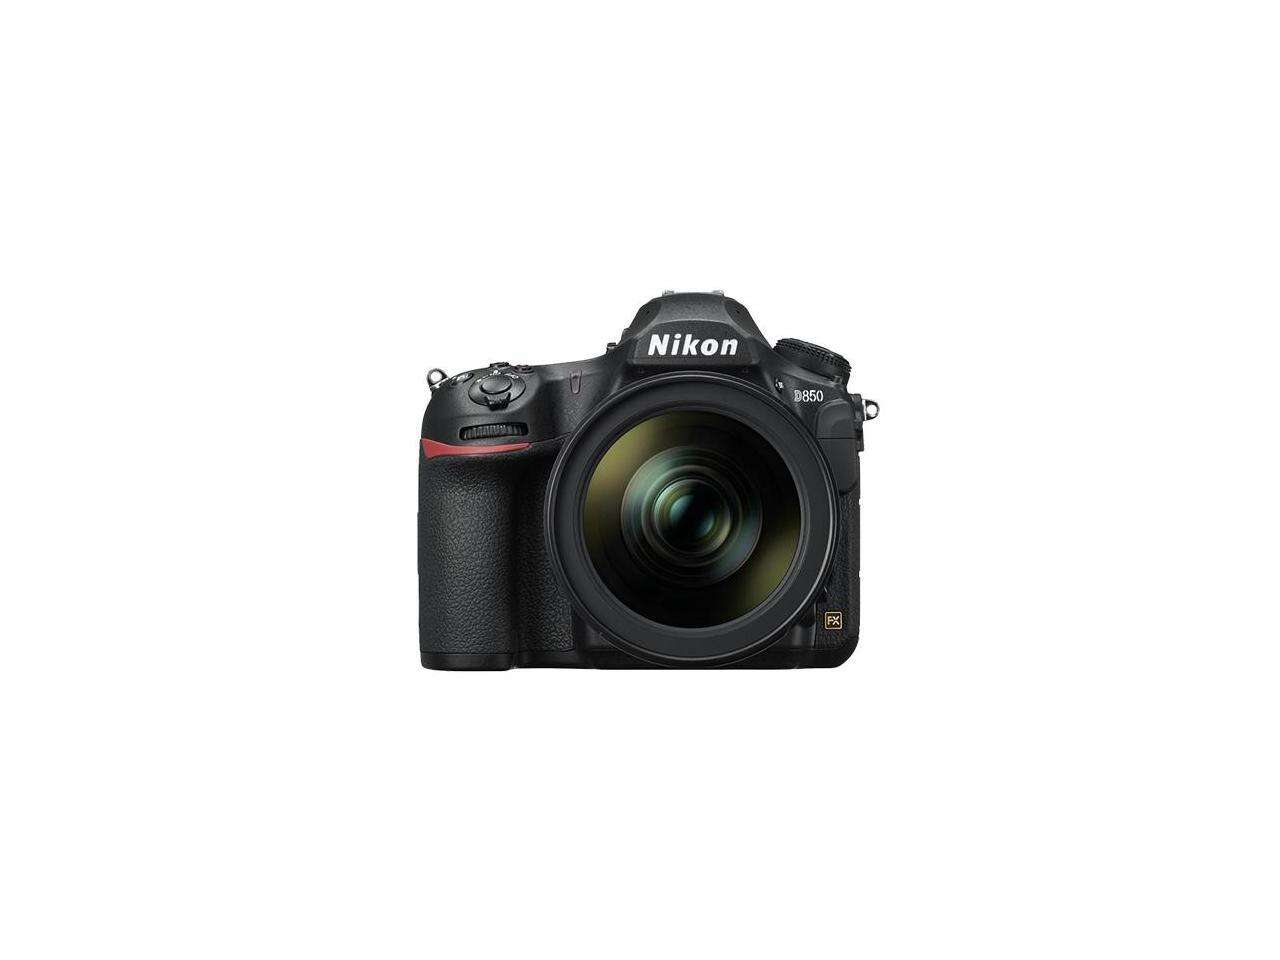 Nikon D850 FX-format 45.7MP Digital SLR Camera with 24-120mm f/4G ED VR Lens